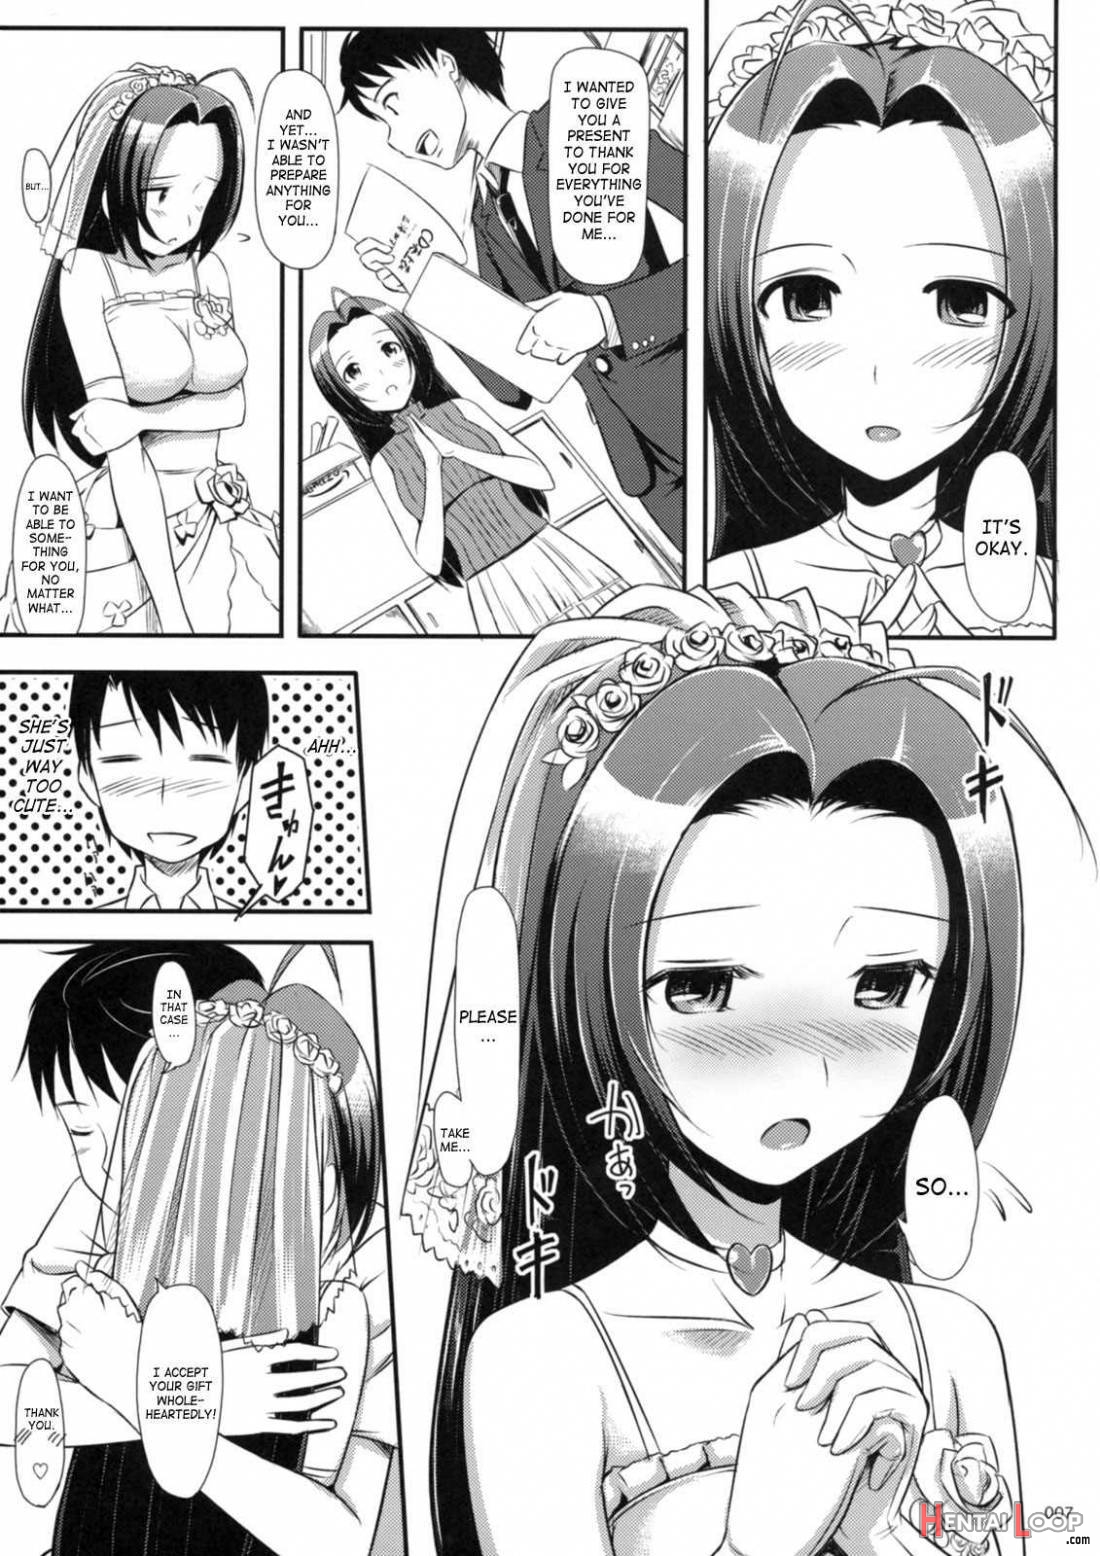 Azusa-san No Present For You! page 7